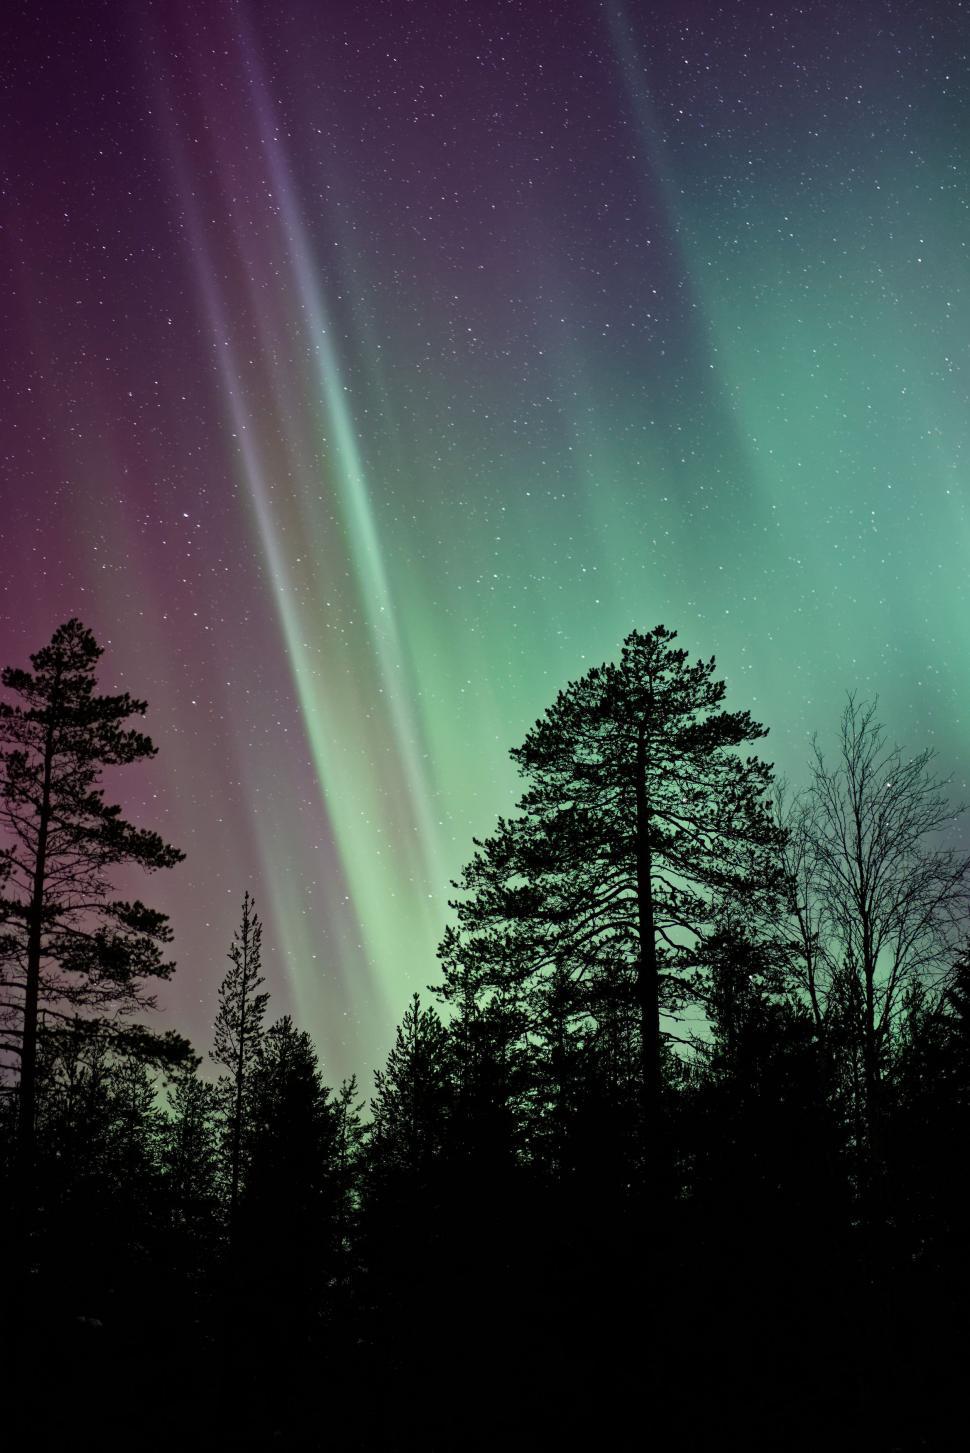 Free Image of The Aurora Borealis Illuminates Sky Above Trees 